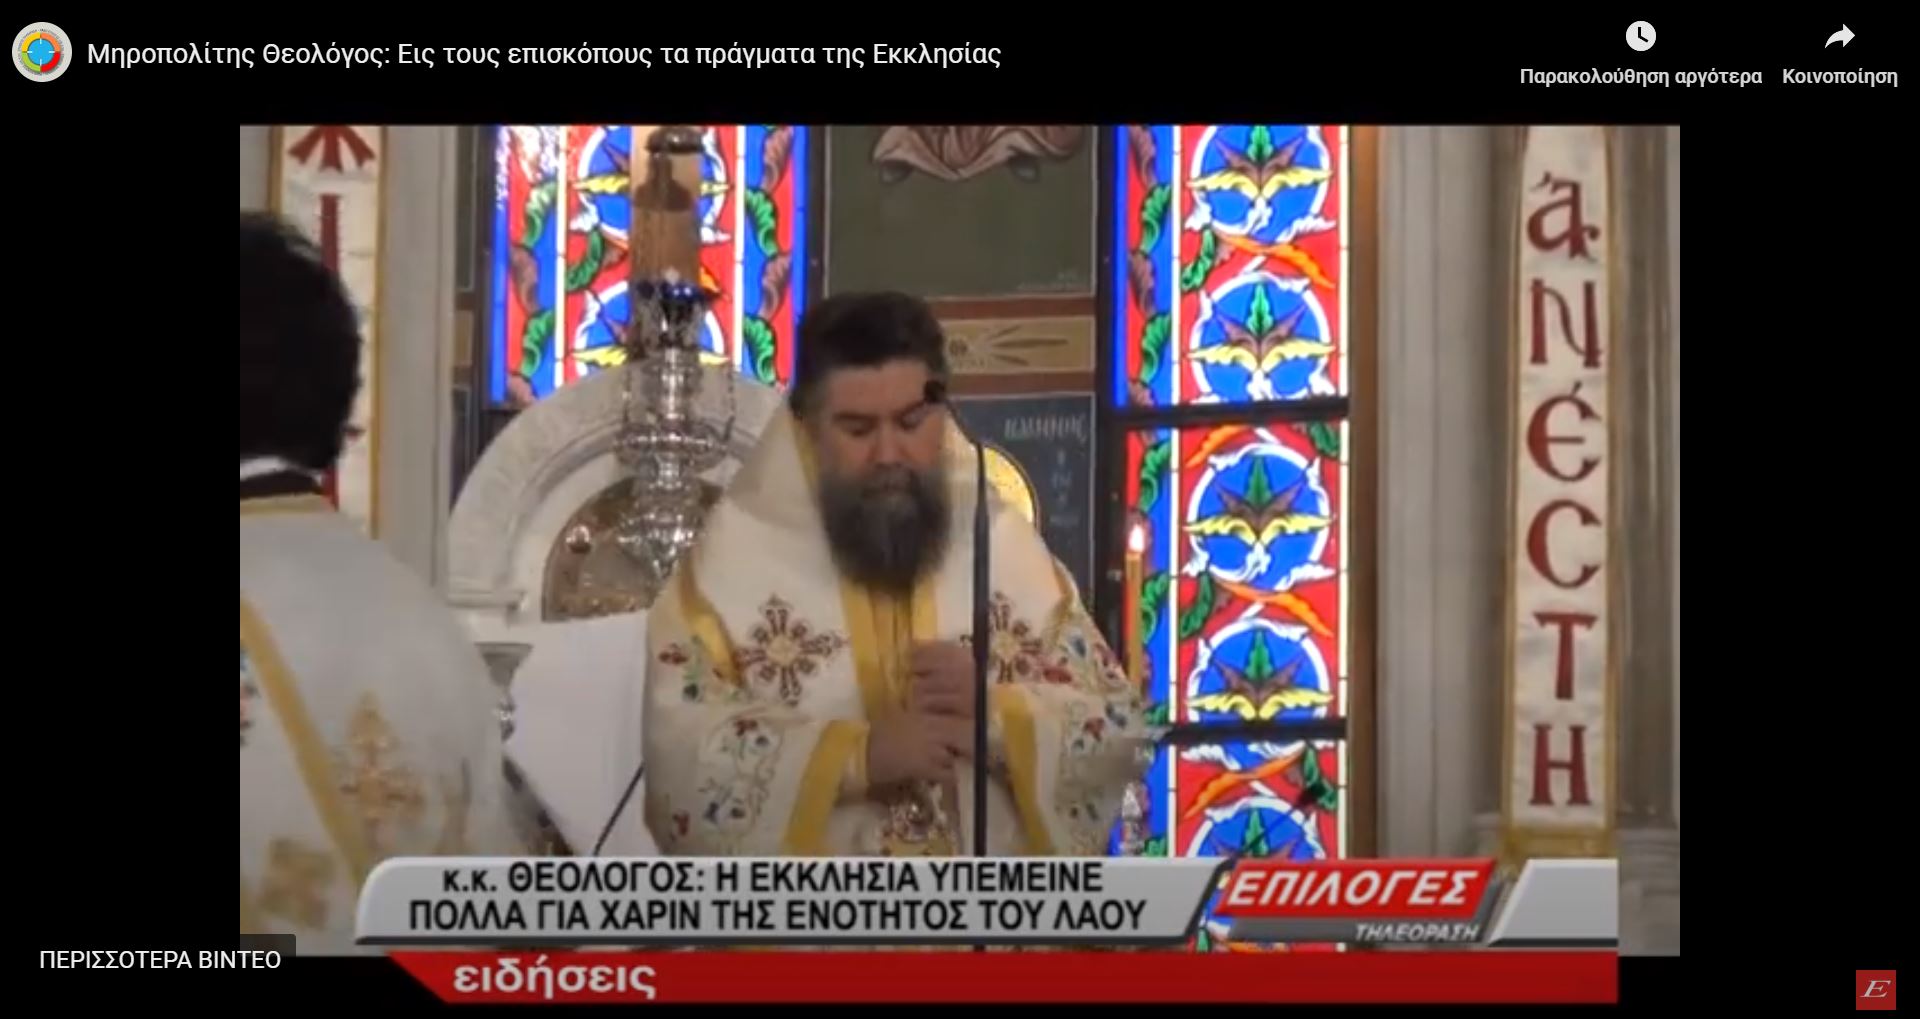 You are currently viewing Σερρών Θεολόγος: ”Οι αρμοδιότητες της Εκκλησίας είναι απαραχάρακτες και απαραβίαστες”